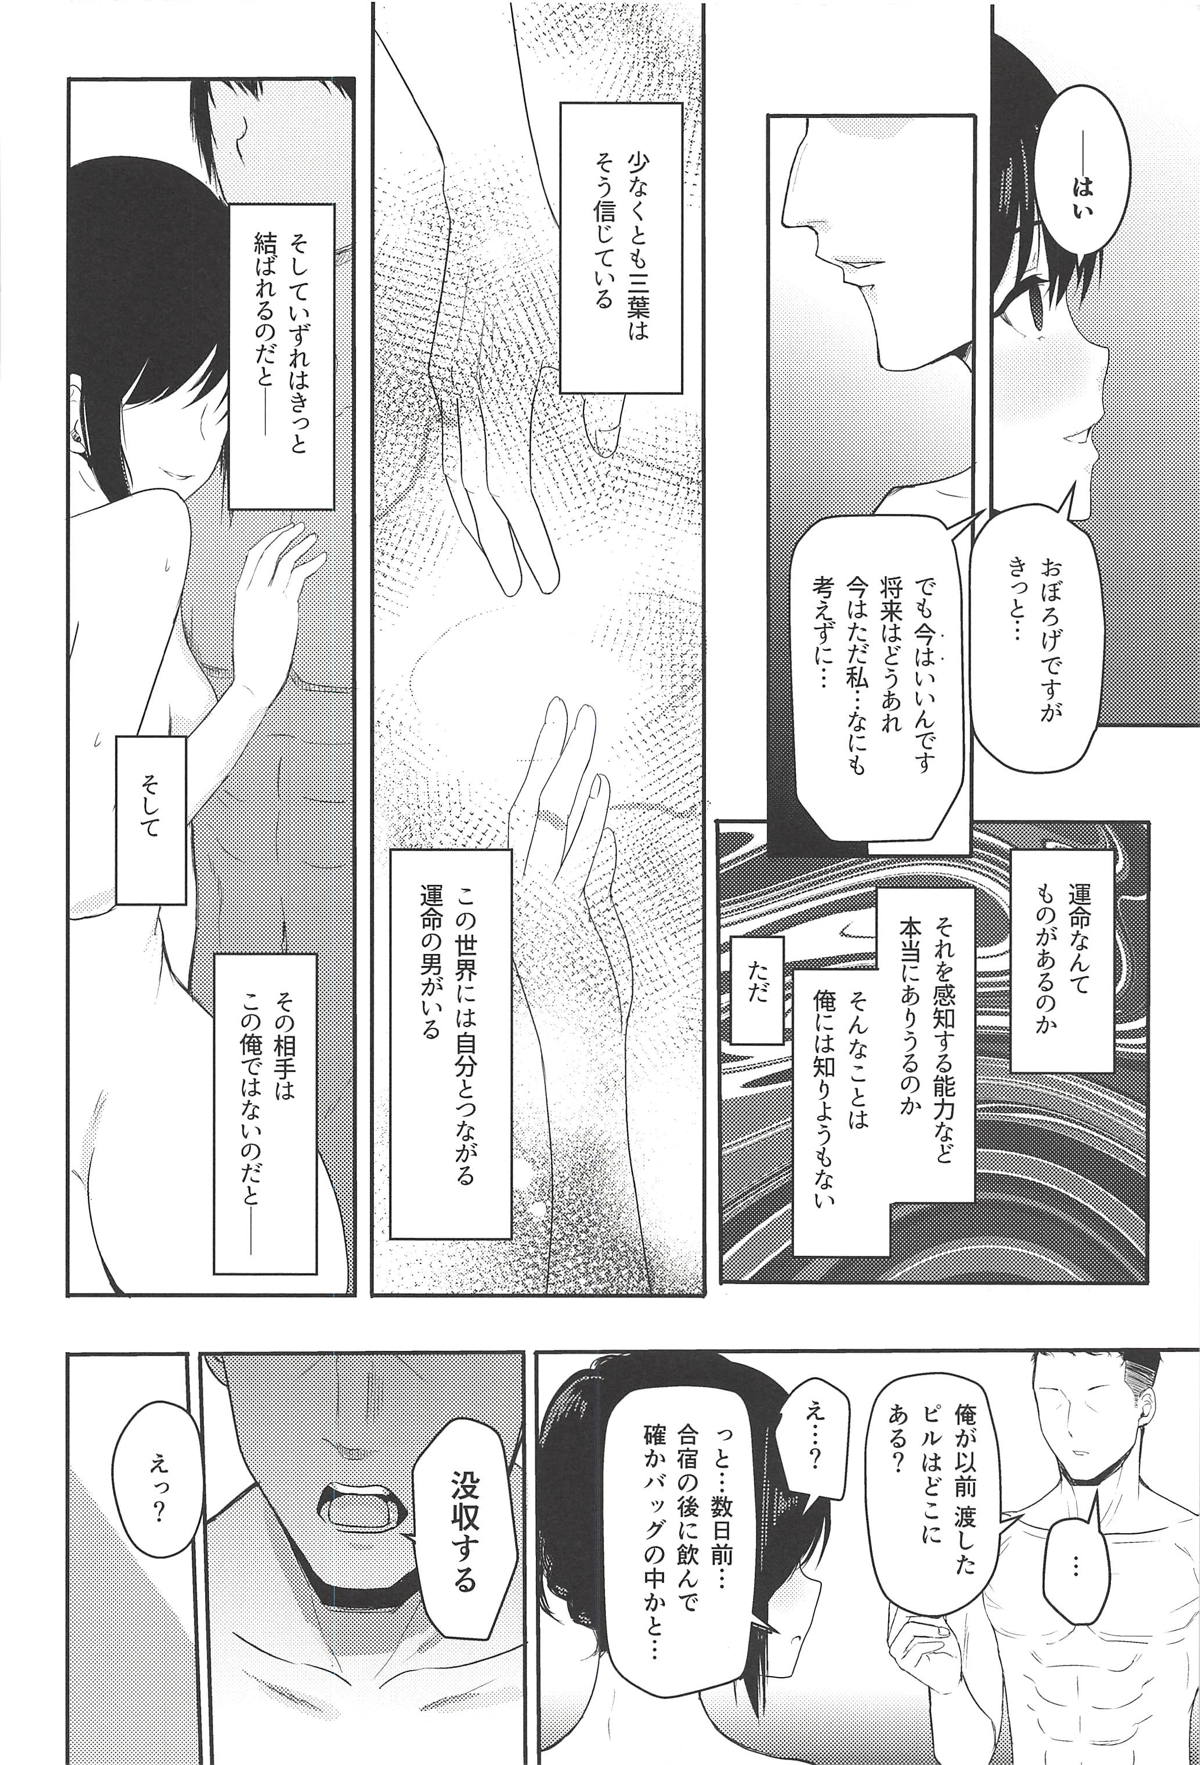 (C94) [シュクリーン] Mitsuha ～Netorare 5～ (君の名は。)